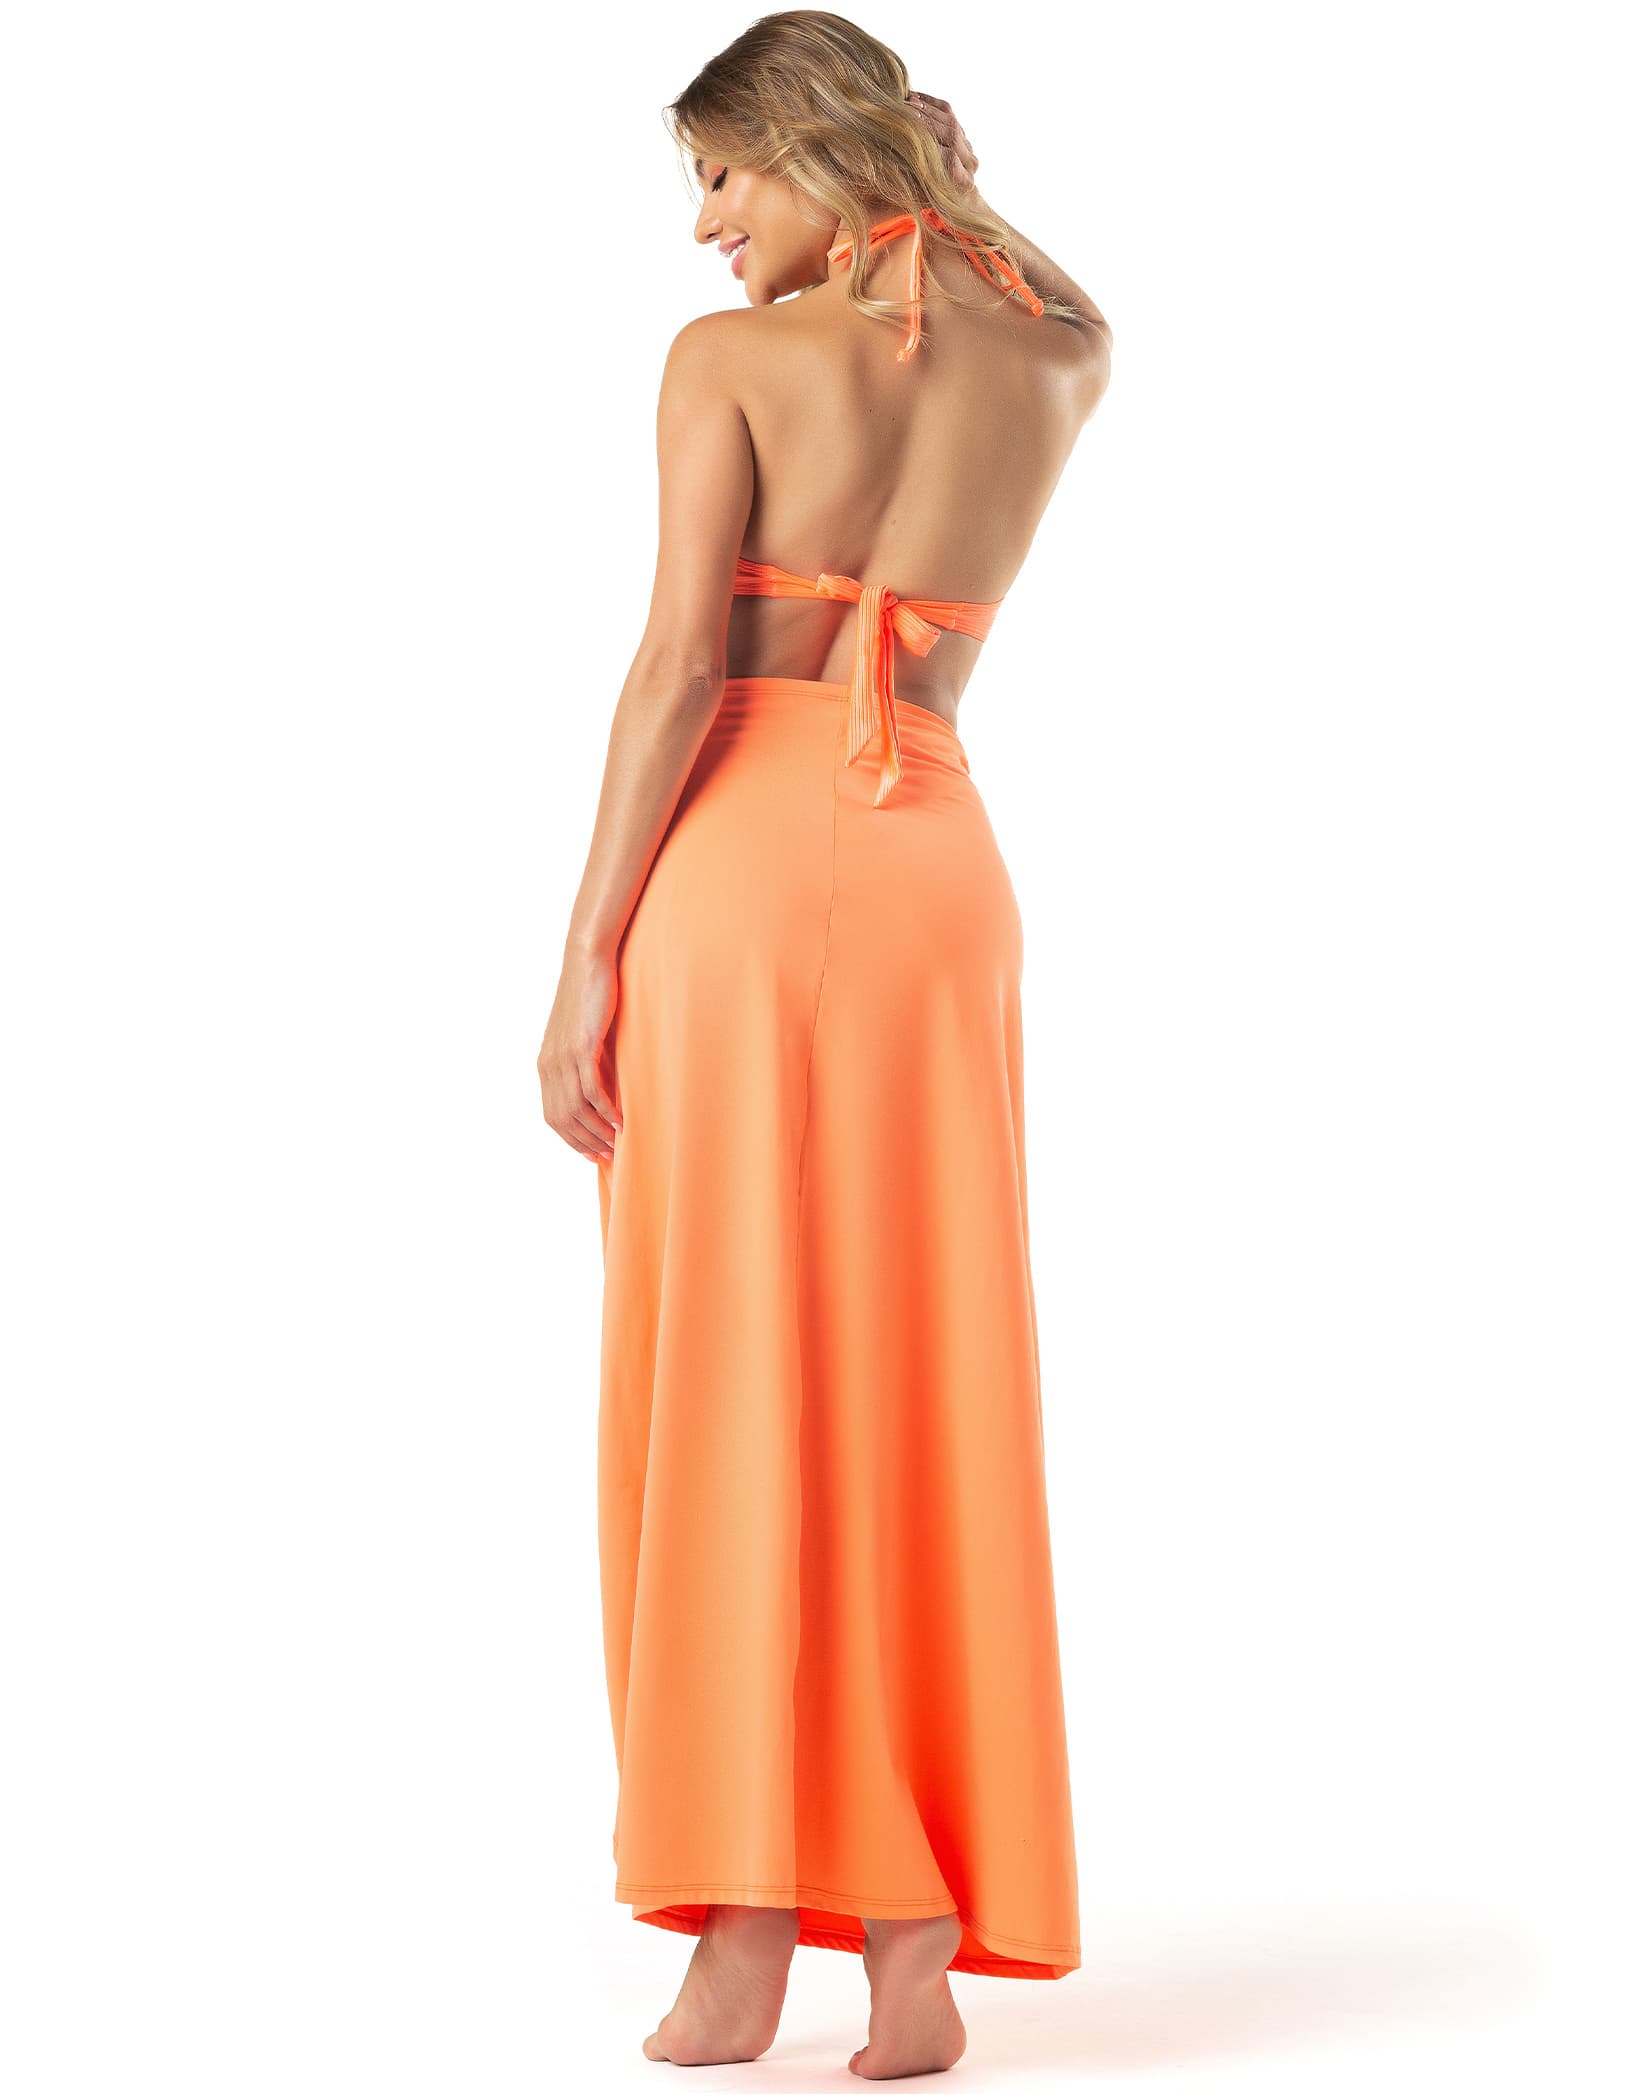 Vestem - Tamara Orange Neon V-Round Bikini Top - BJ185C0007